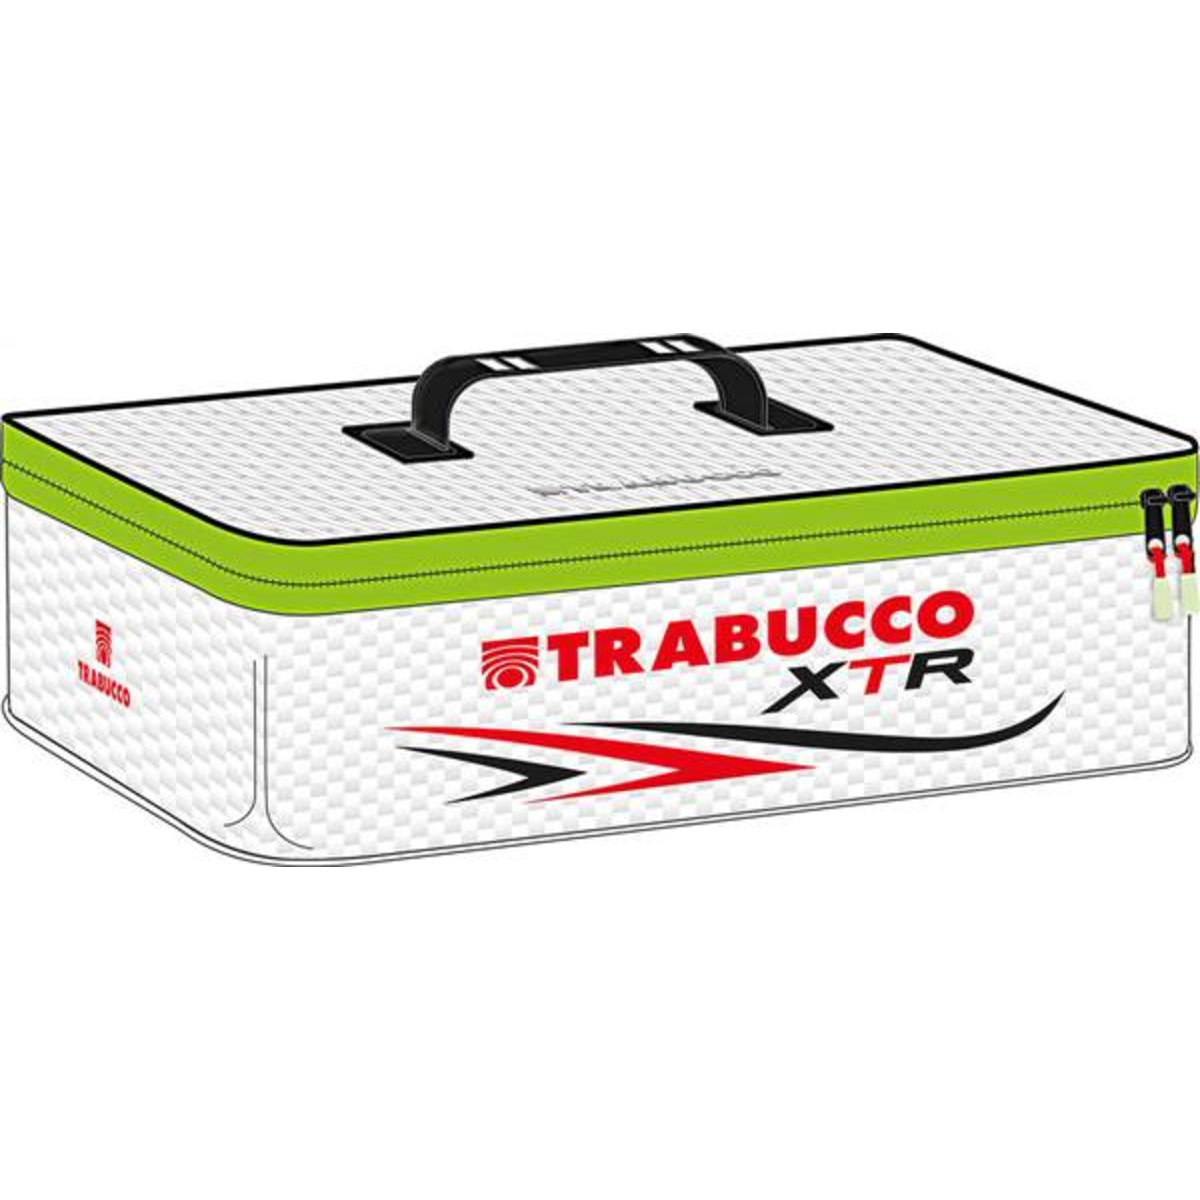 Trabucco Eva White Accessories Bags Xtr - 35x23x10 cm